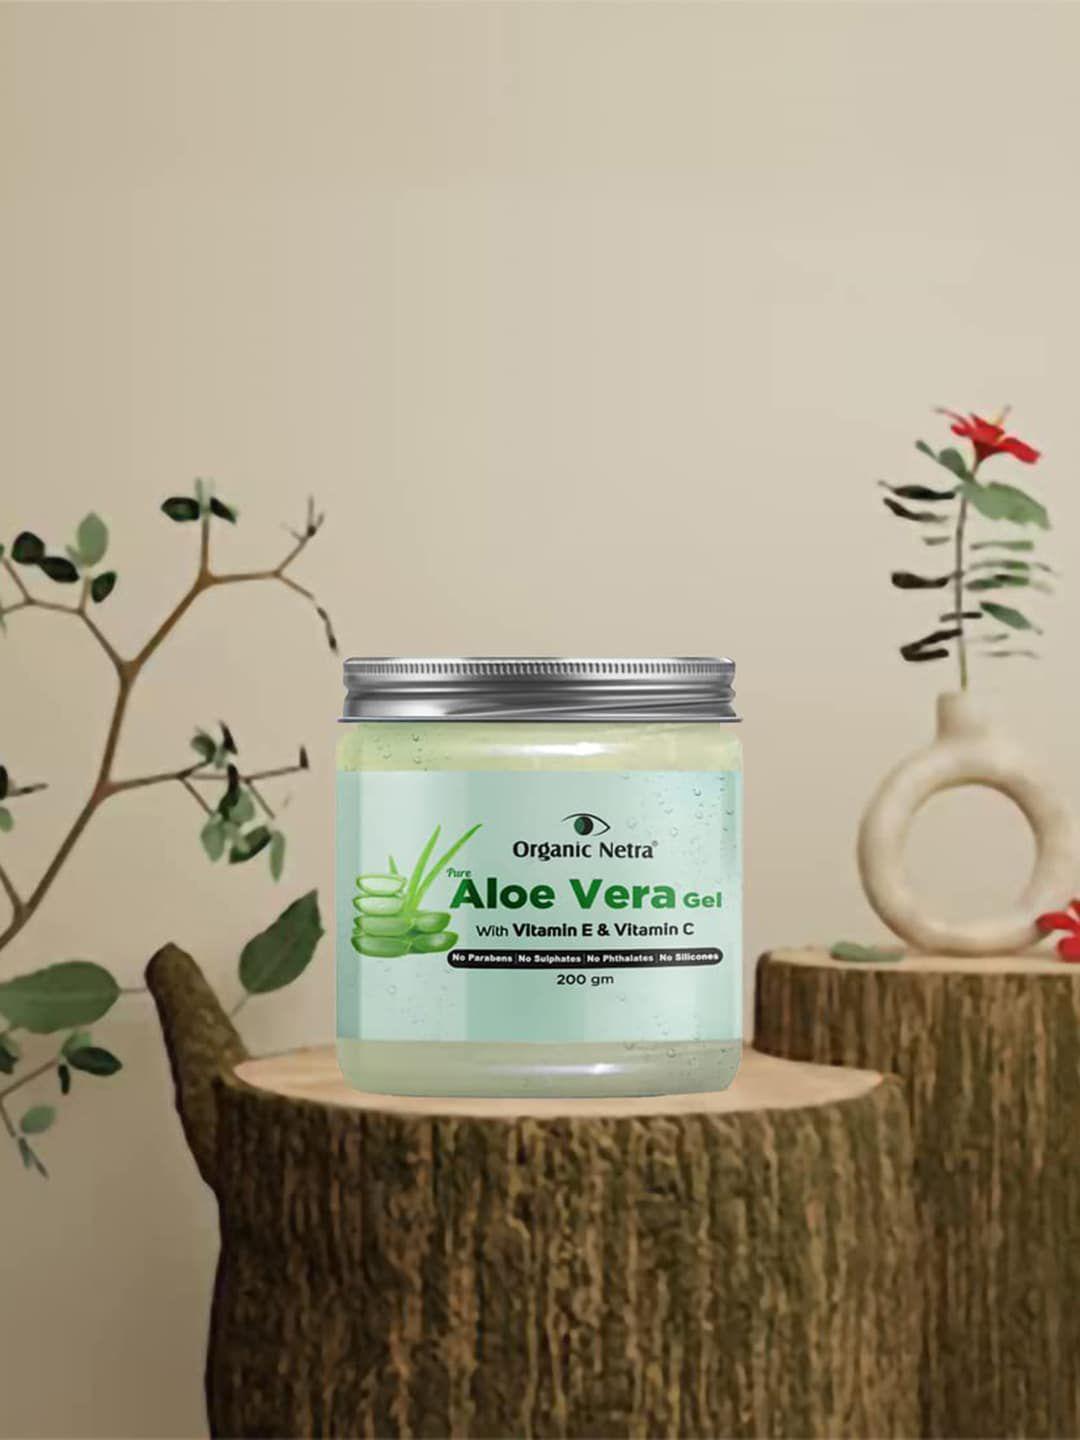 organic netra pure aloe vera gel with vitamin c & e for skin - face & hair - 200 g